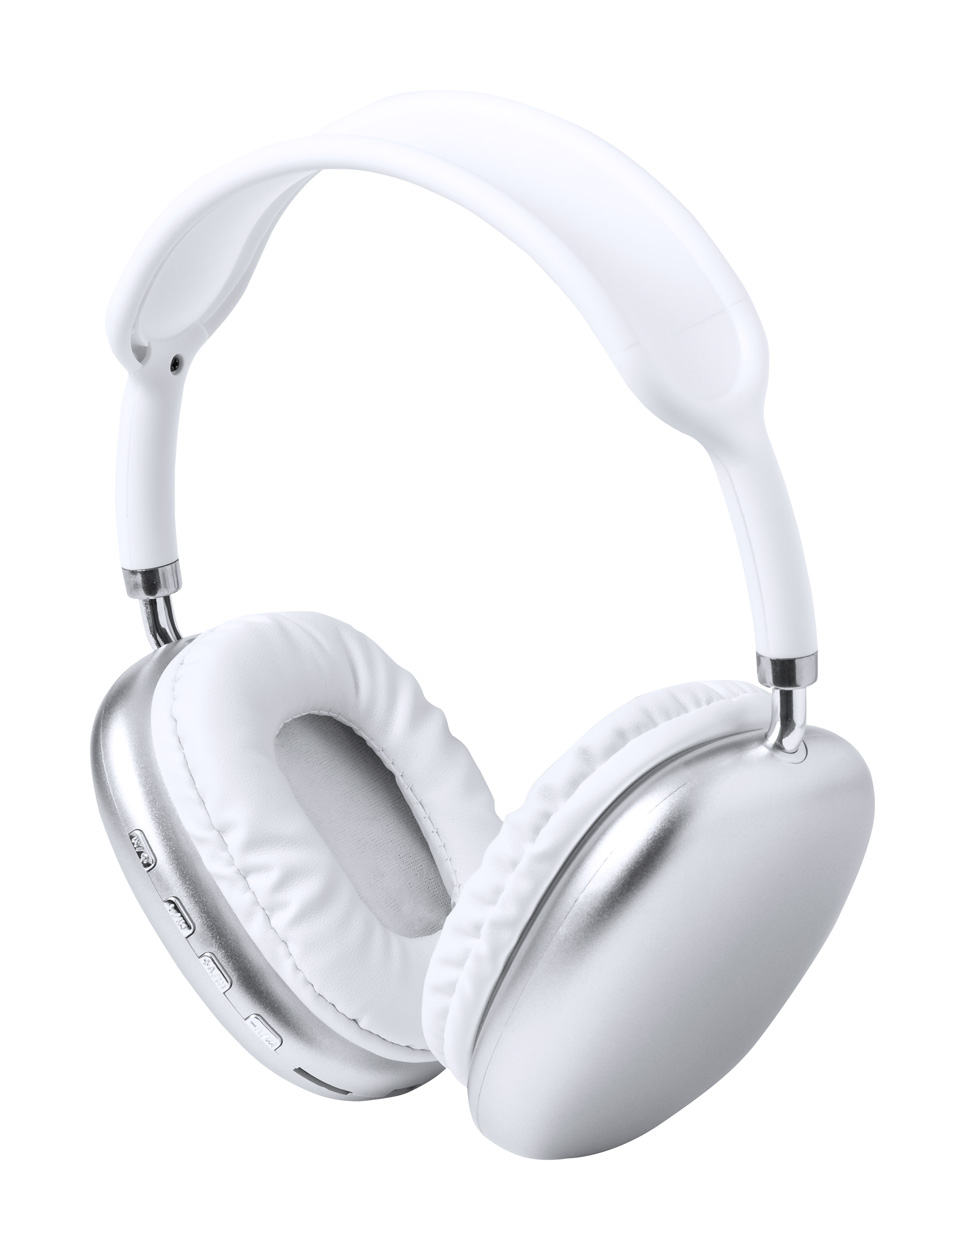 Plastic wireless headphones CURNEY - white